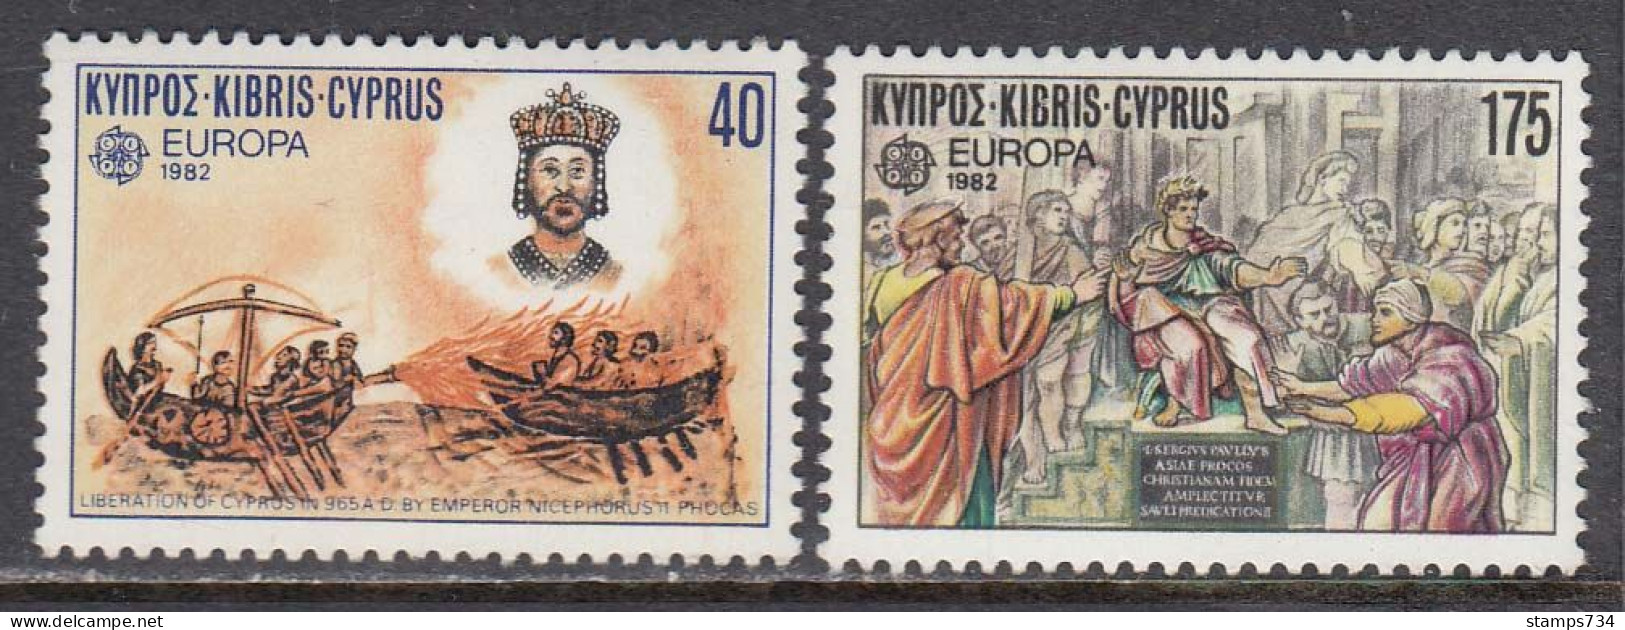 Cyprus 1982 - EUROPA(Faits Historiques), Mi-Nr. 566/67, MNH** - Ungebraucht